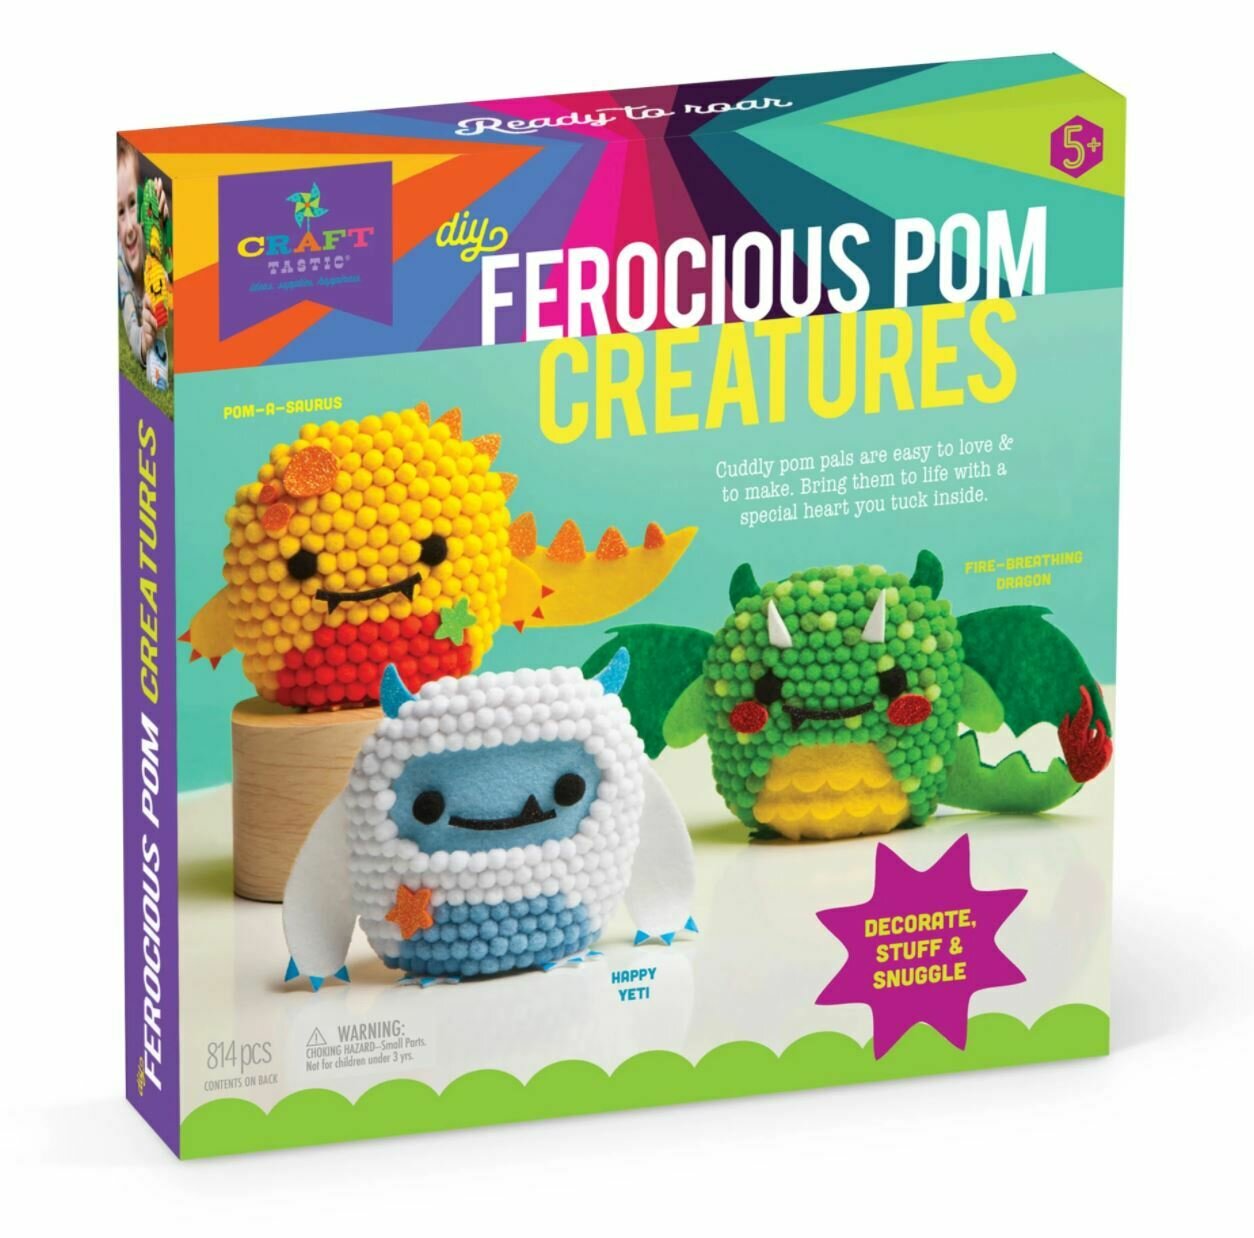 Ferocious Pom Creatures